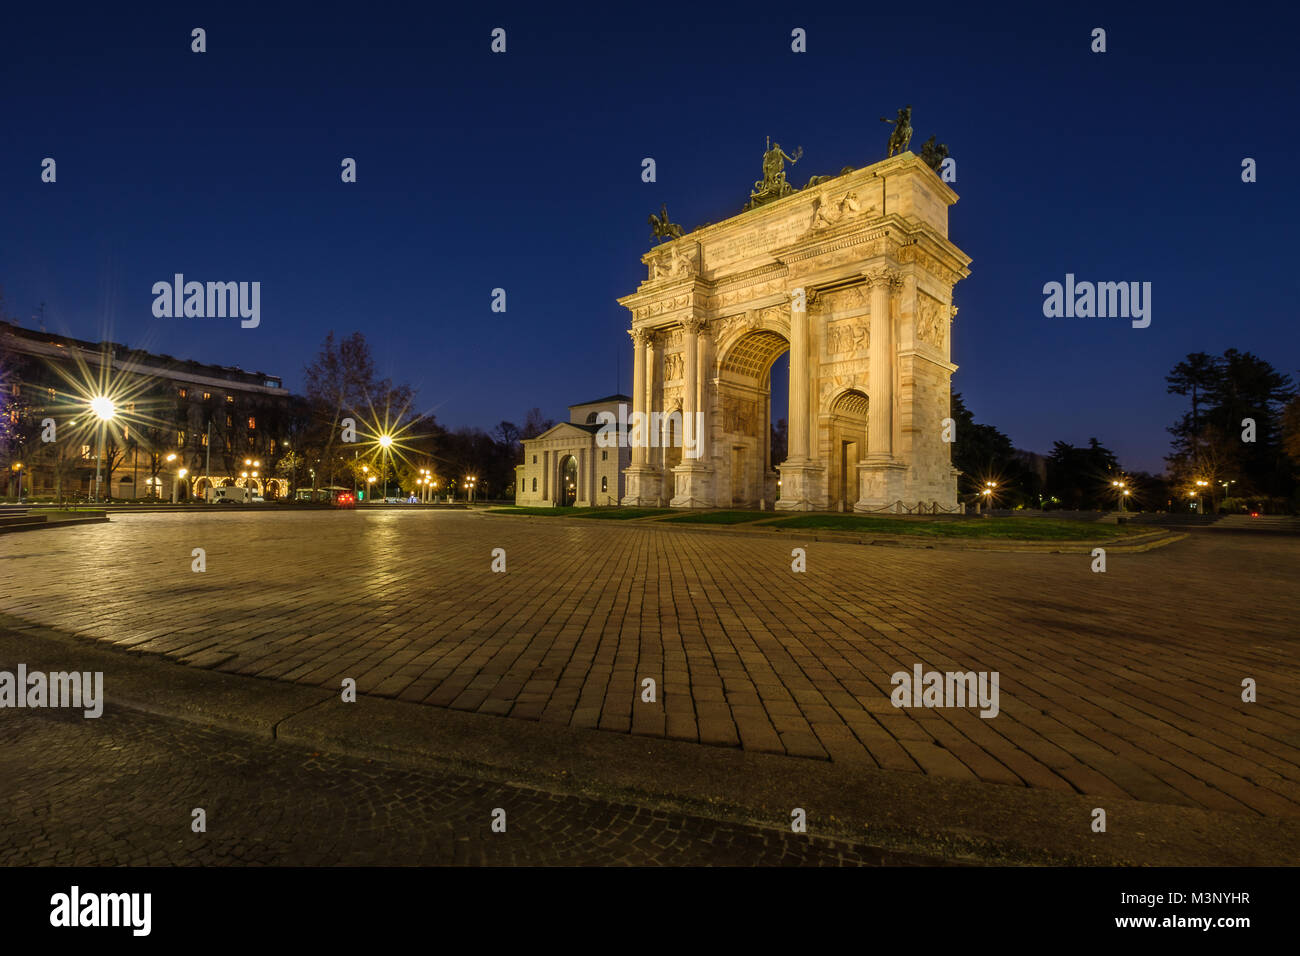 Arco della Pace Gate in Milan, Italy. Stock Photo